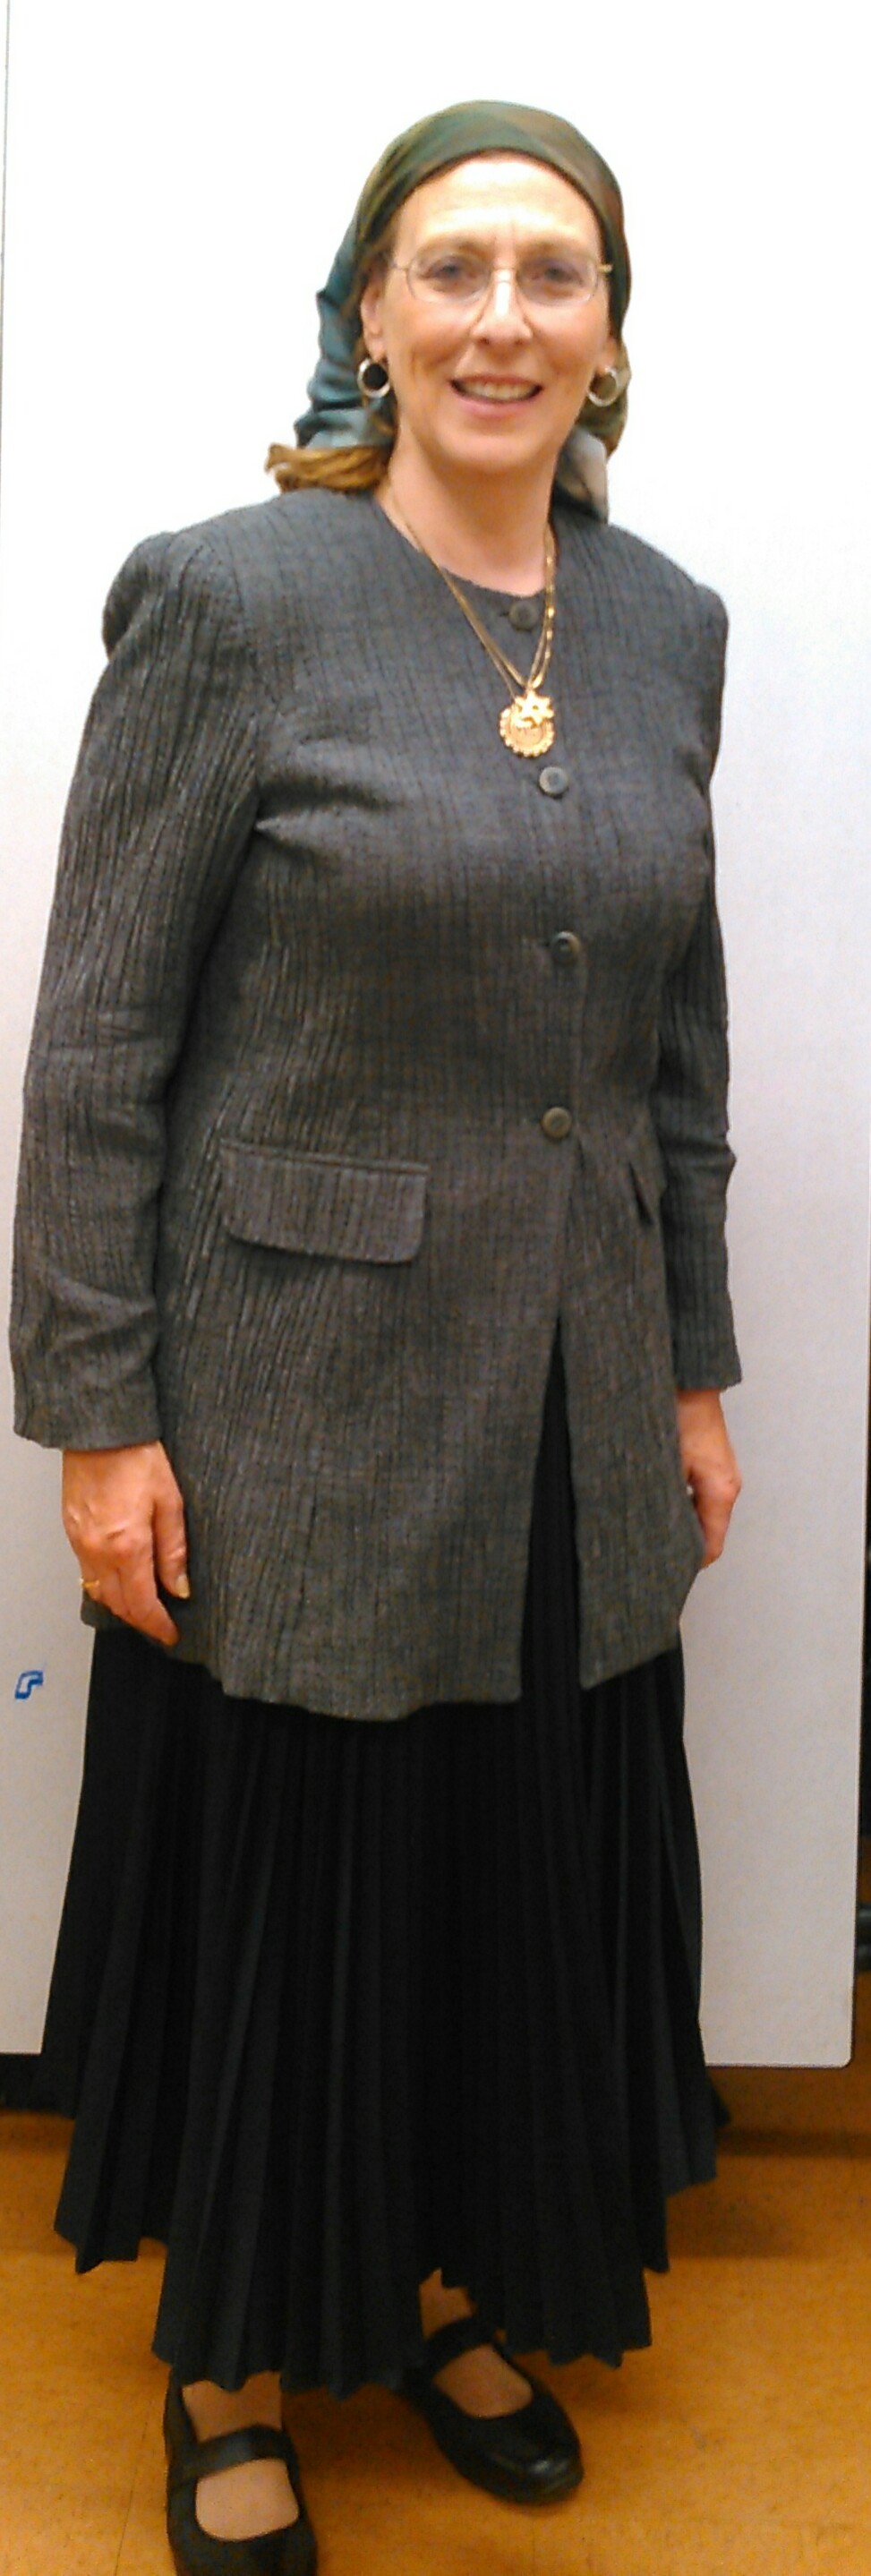 Nancy Ellen Shore, Hasidic woman, 2015